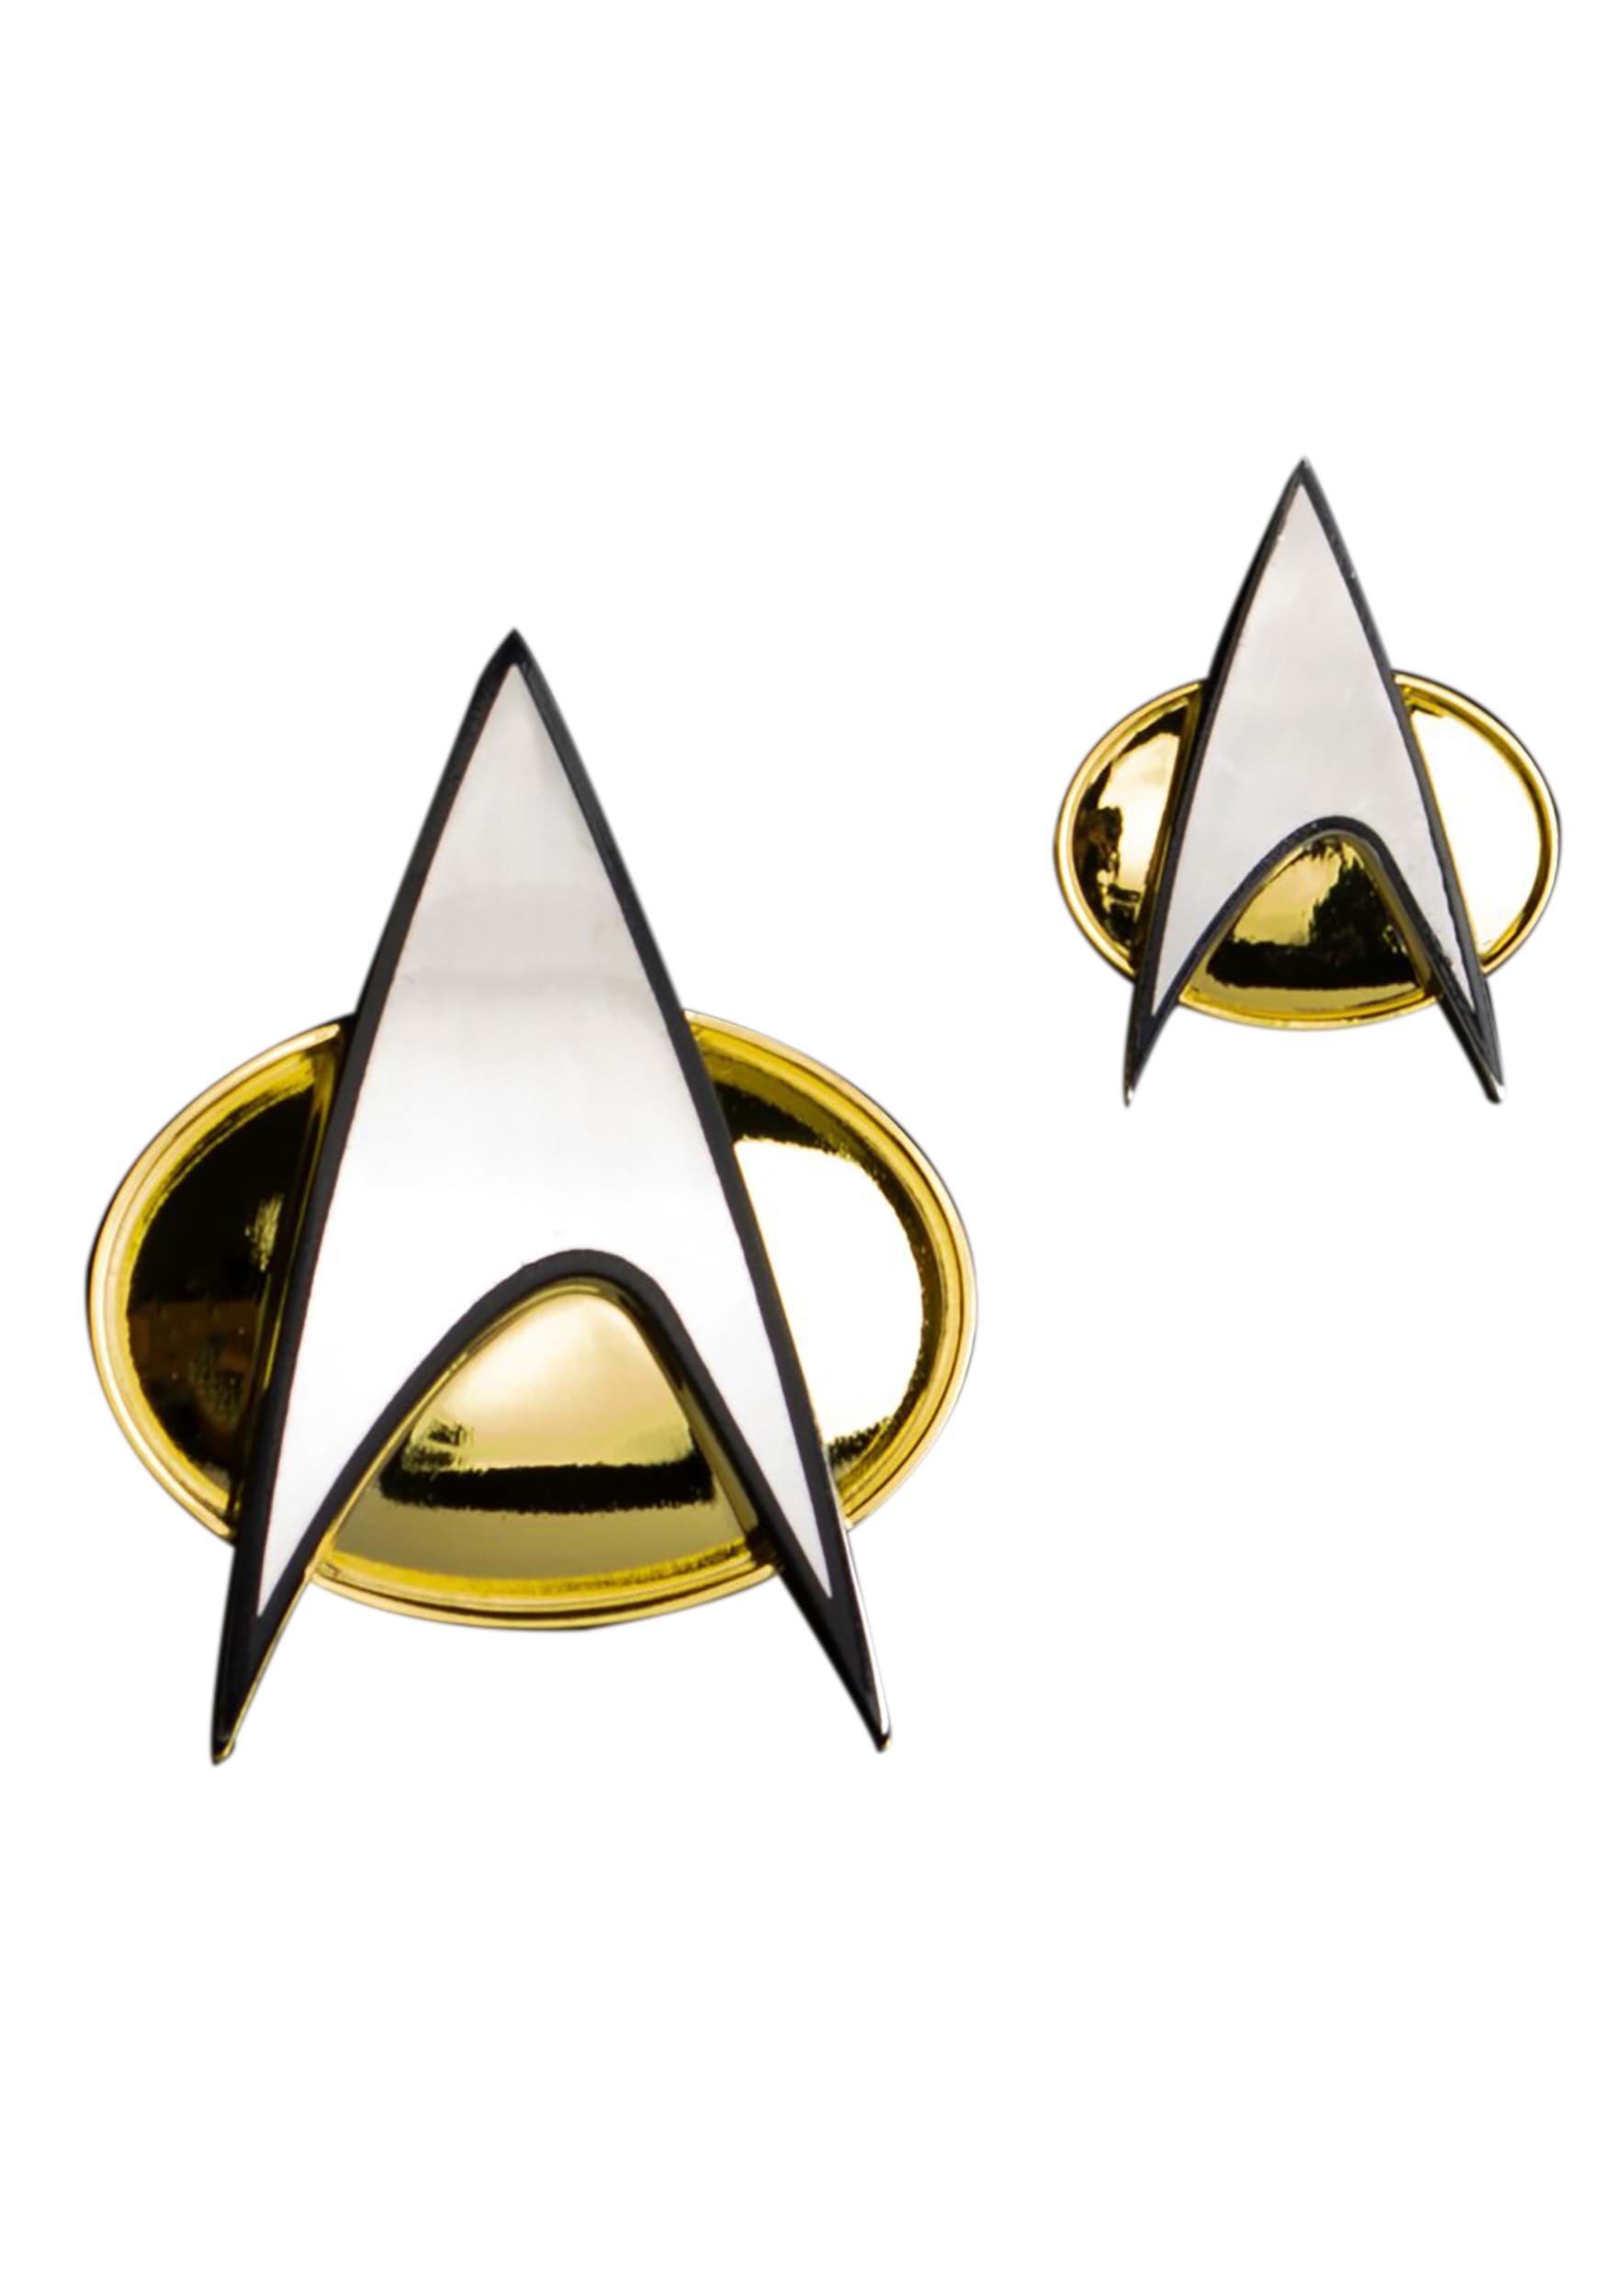 Star Trek Voyager Communication Badge Replica - 2